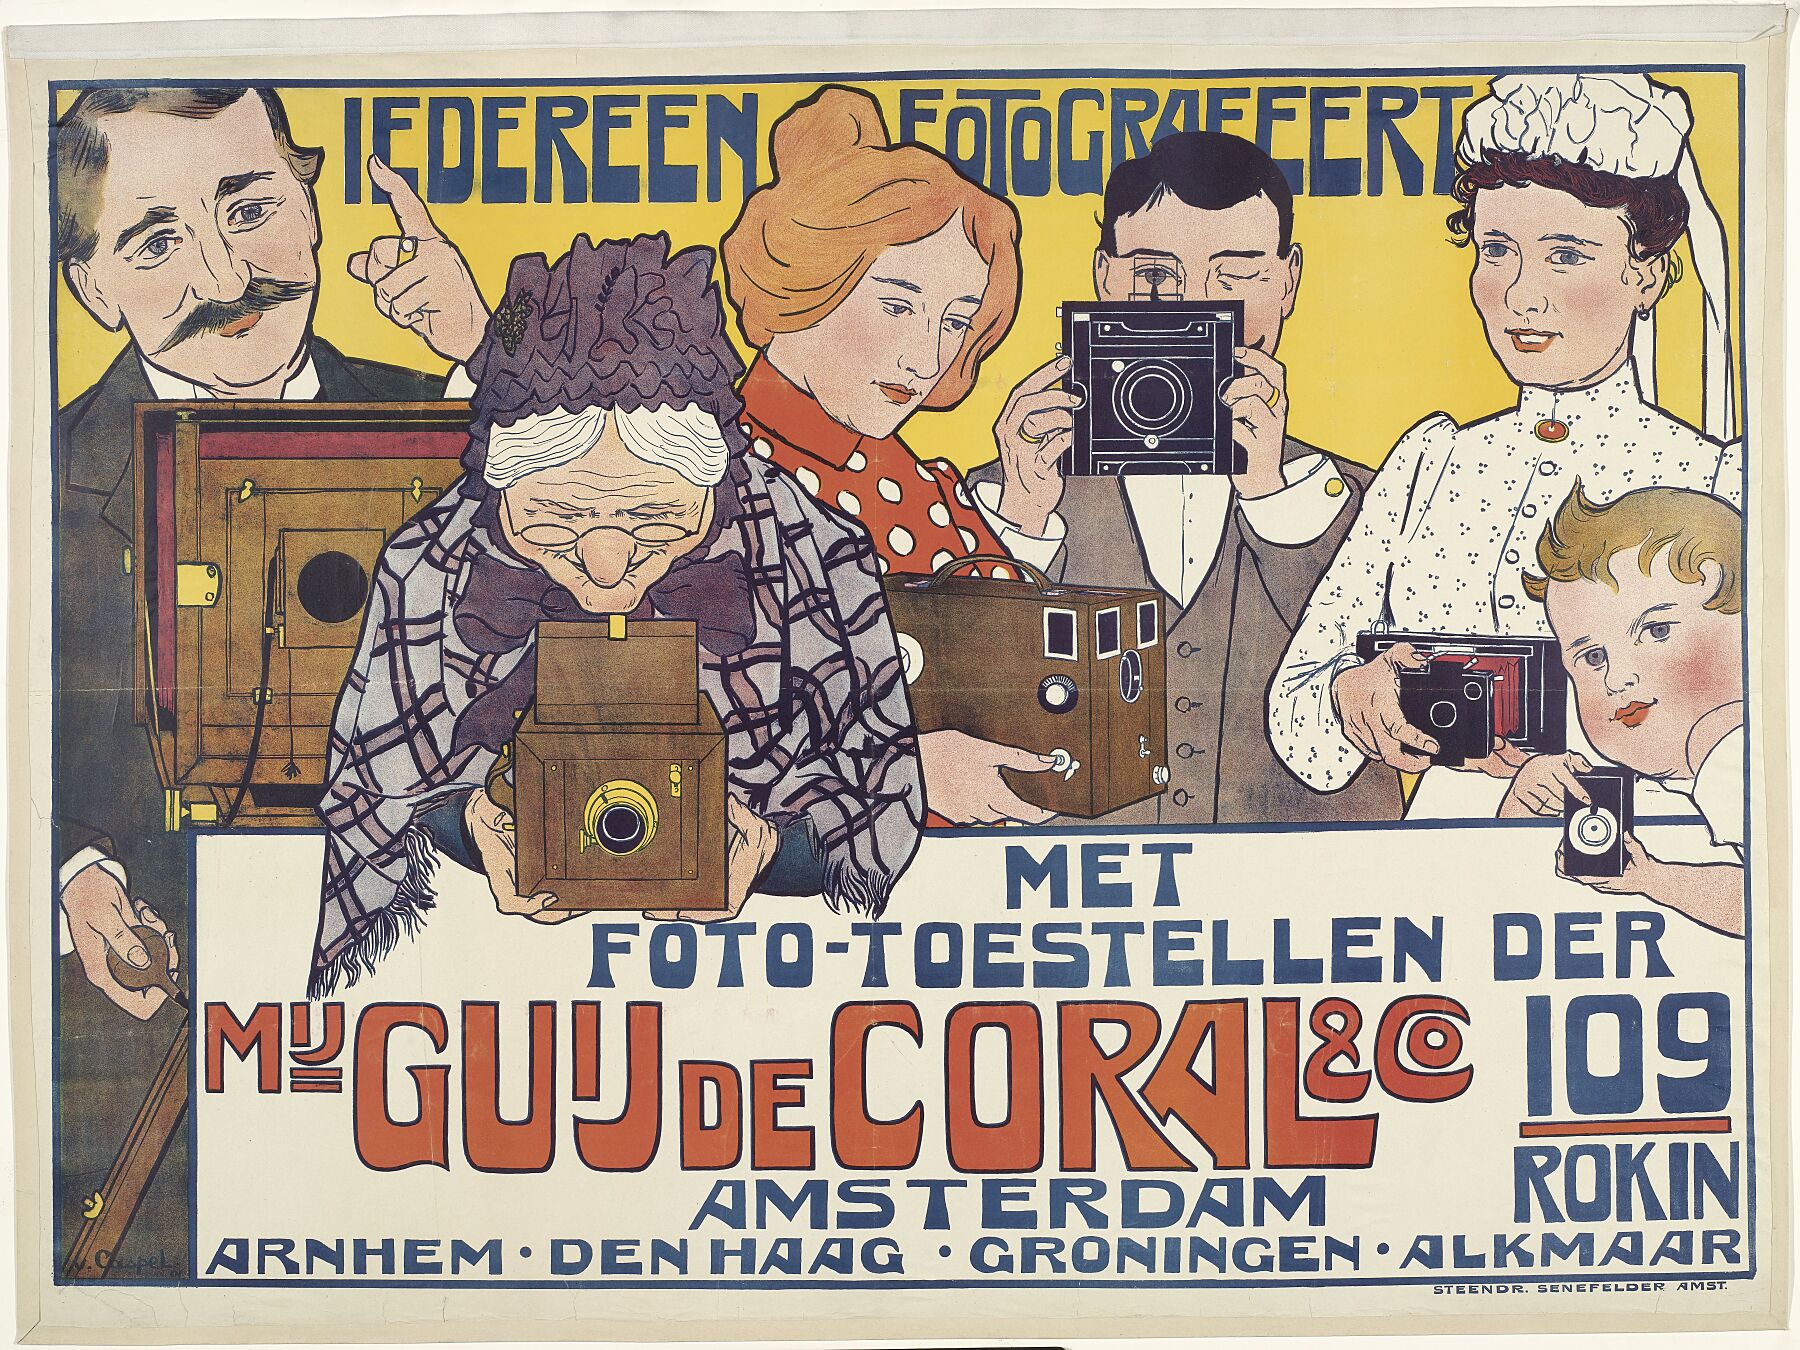 Everyone a Photographer Poster for Guy de Coral & Co, Johann Georg van Caspel, 1901